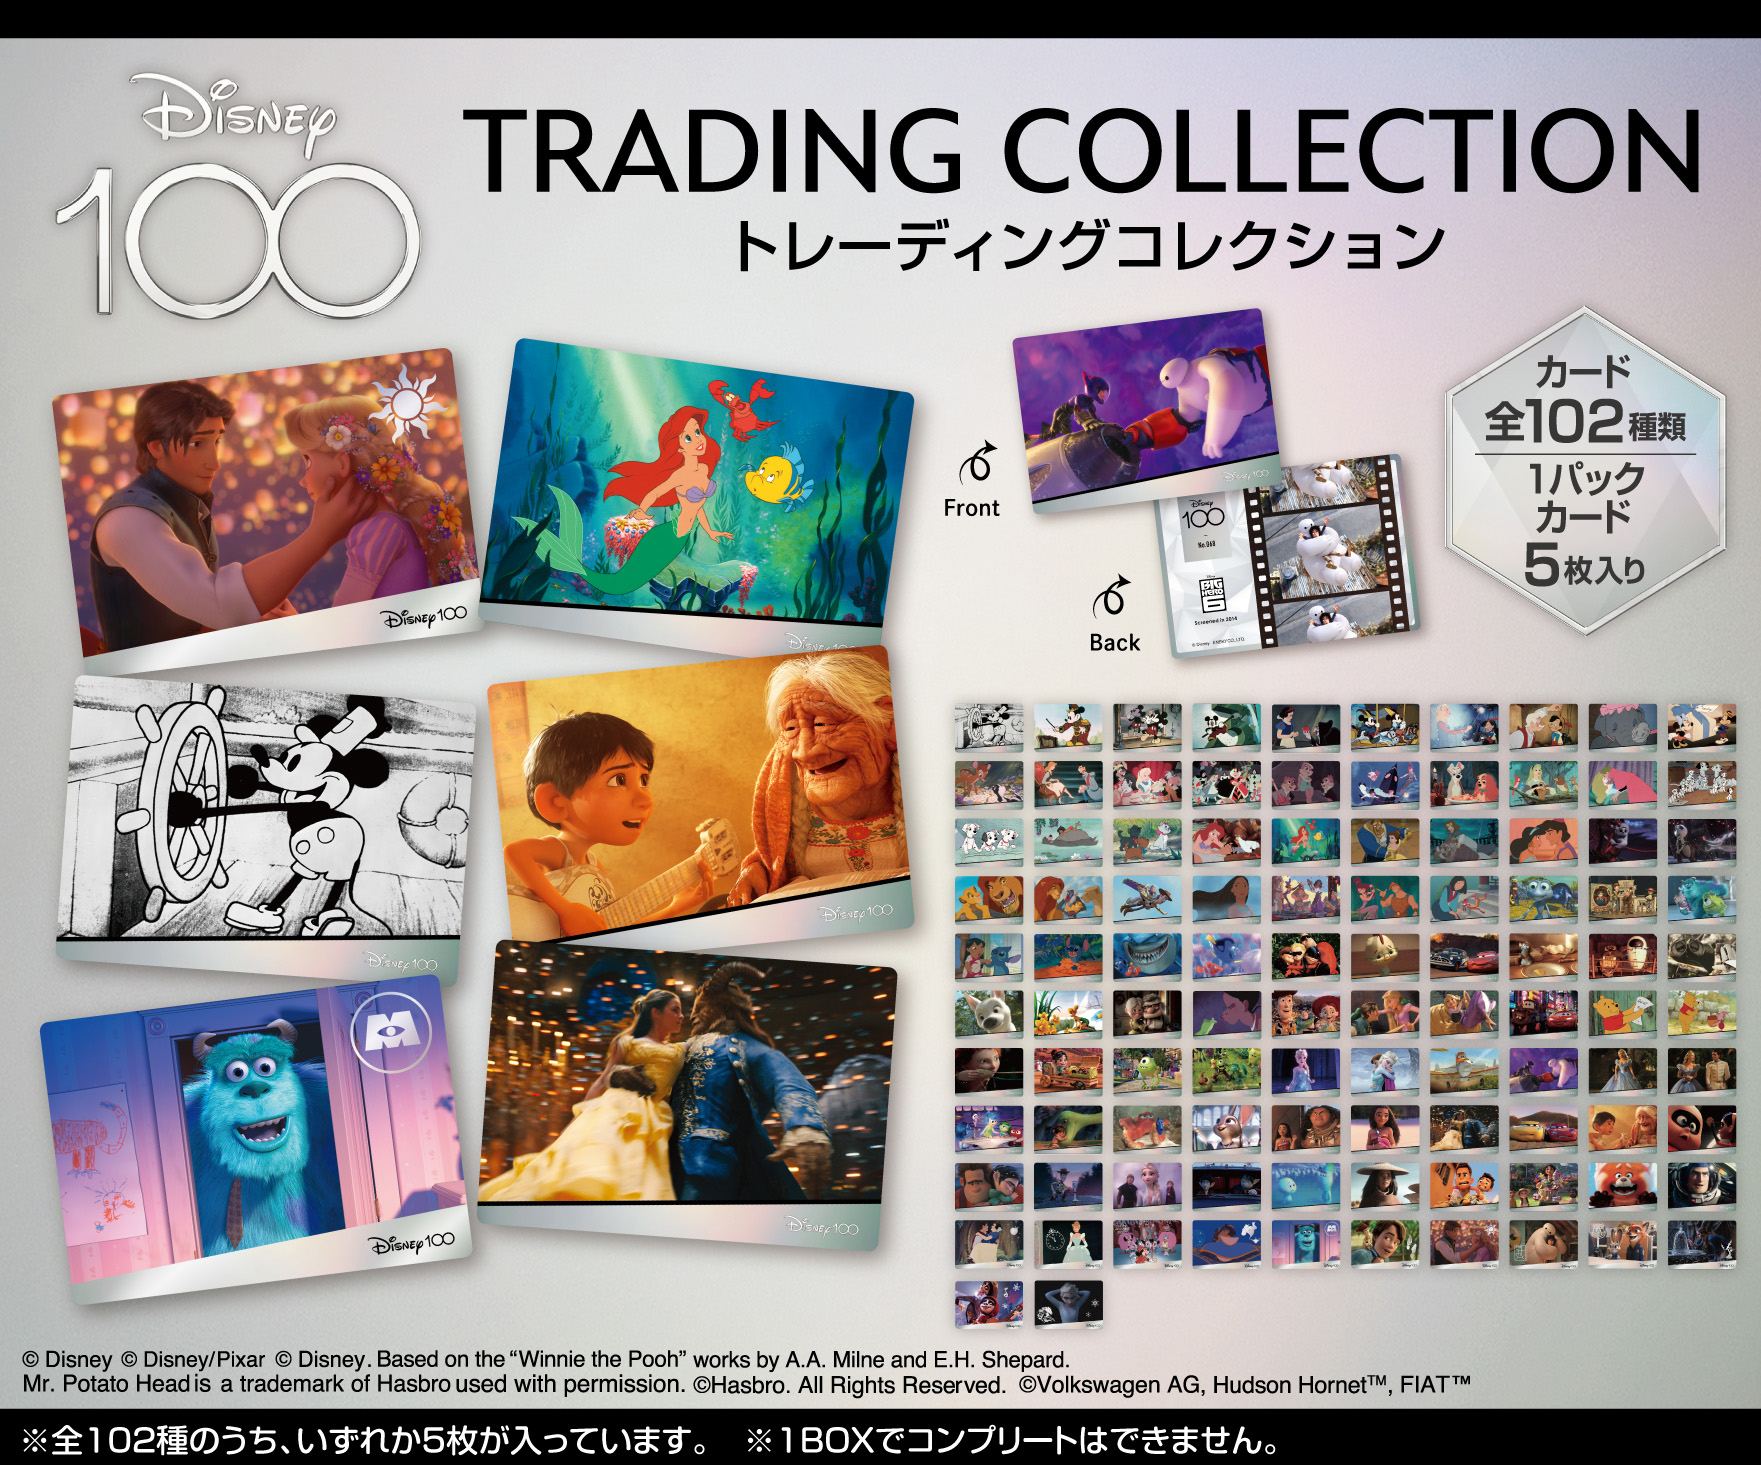 Disney100 Trading Collection (Set of 12 packs) Ensky